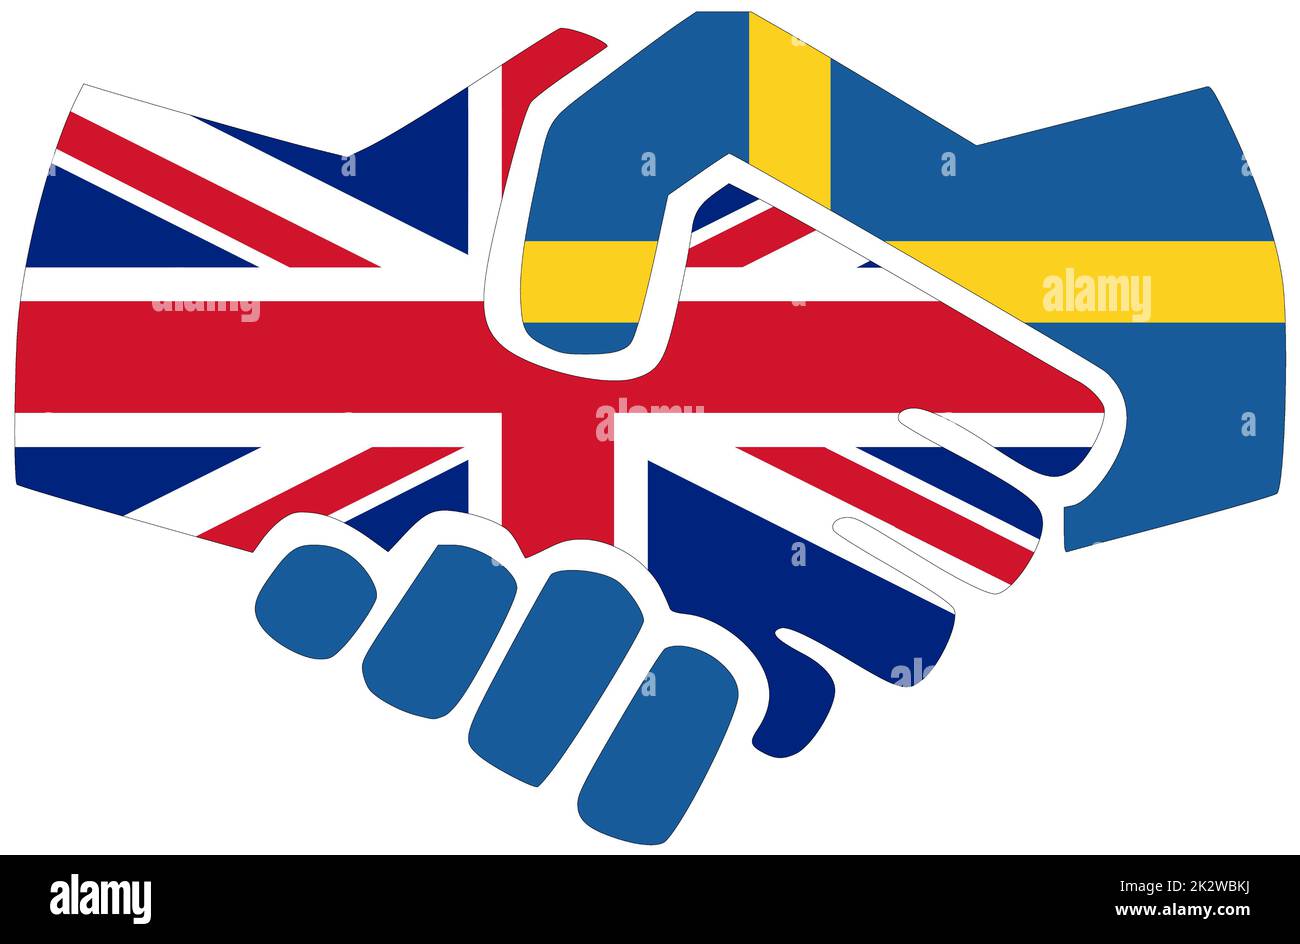 UK - Sweden : Handshake, symbol of agreement or friendship Stock Photo